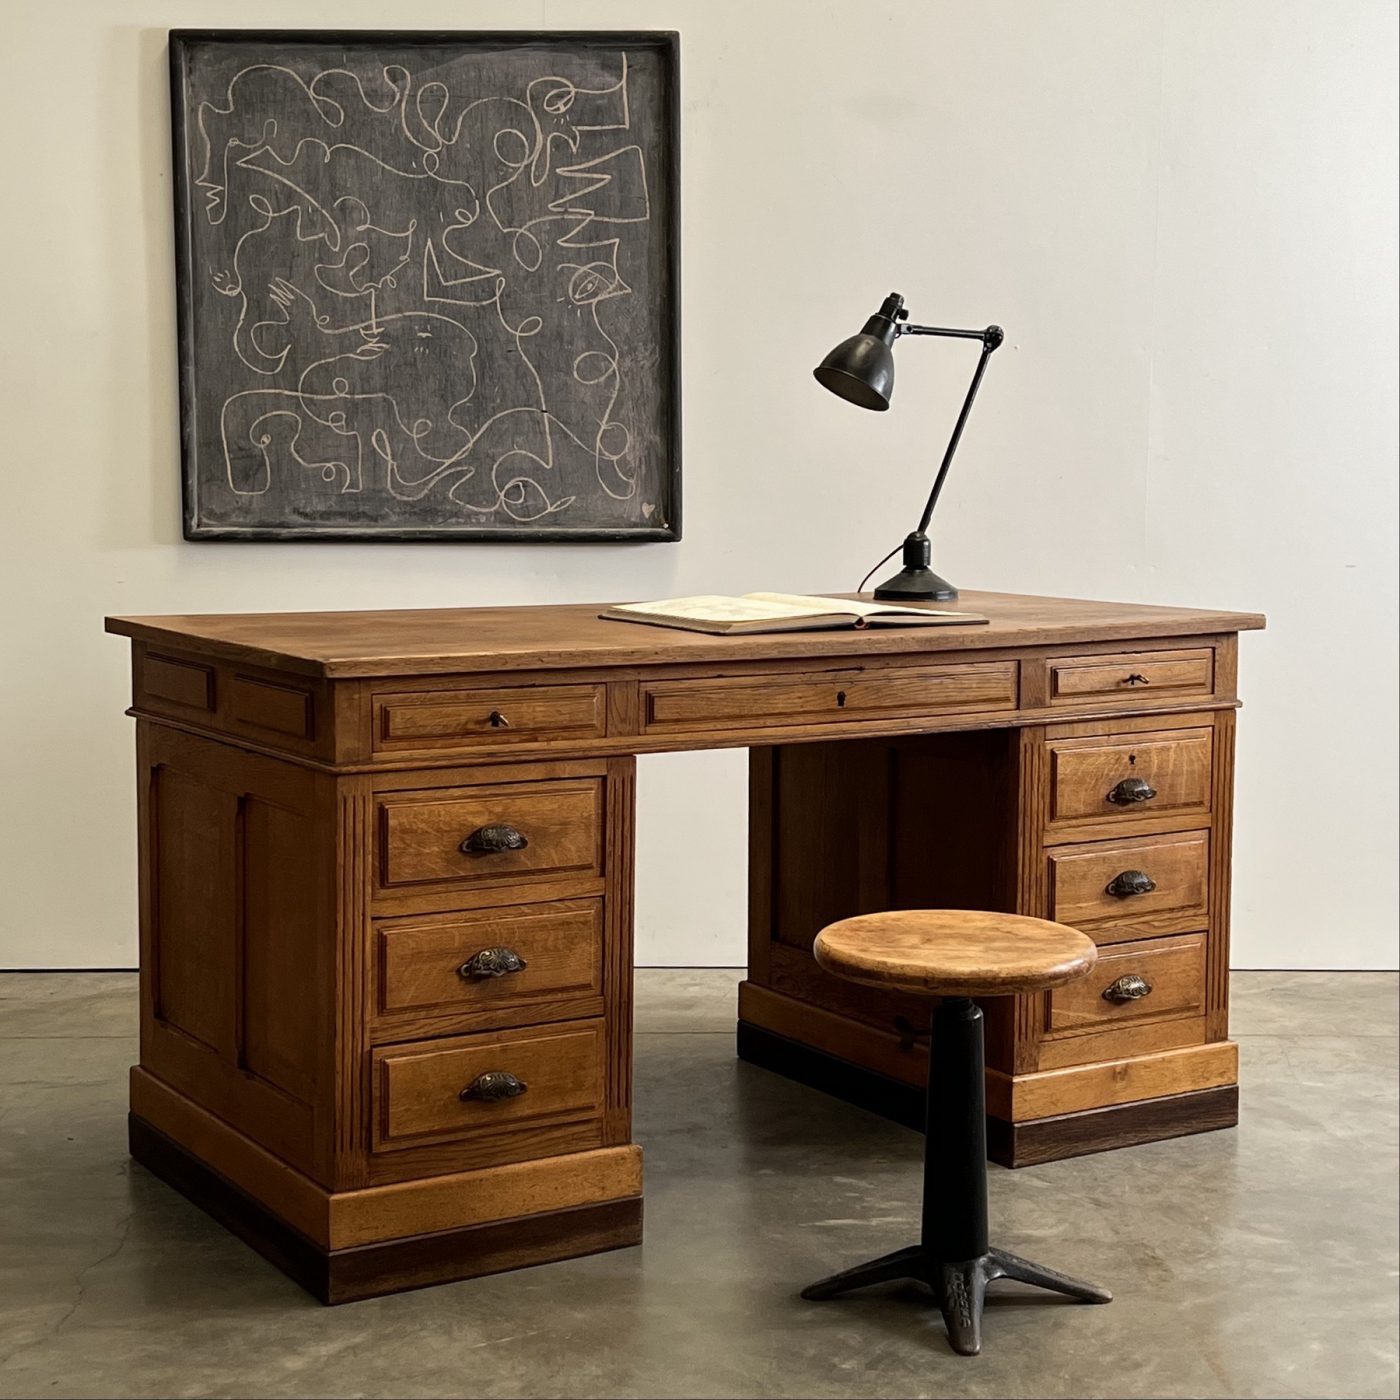 objet-vagabond-oak-desk0006